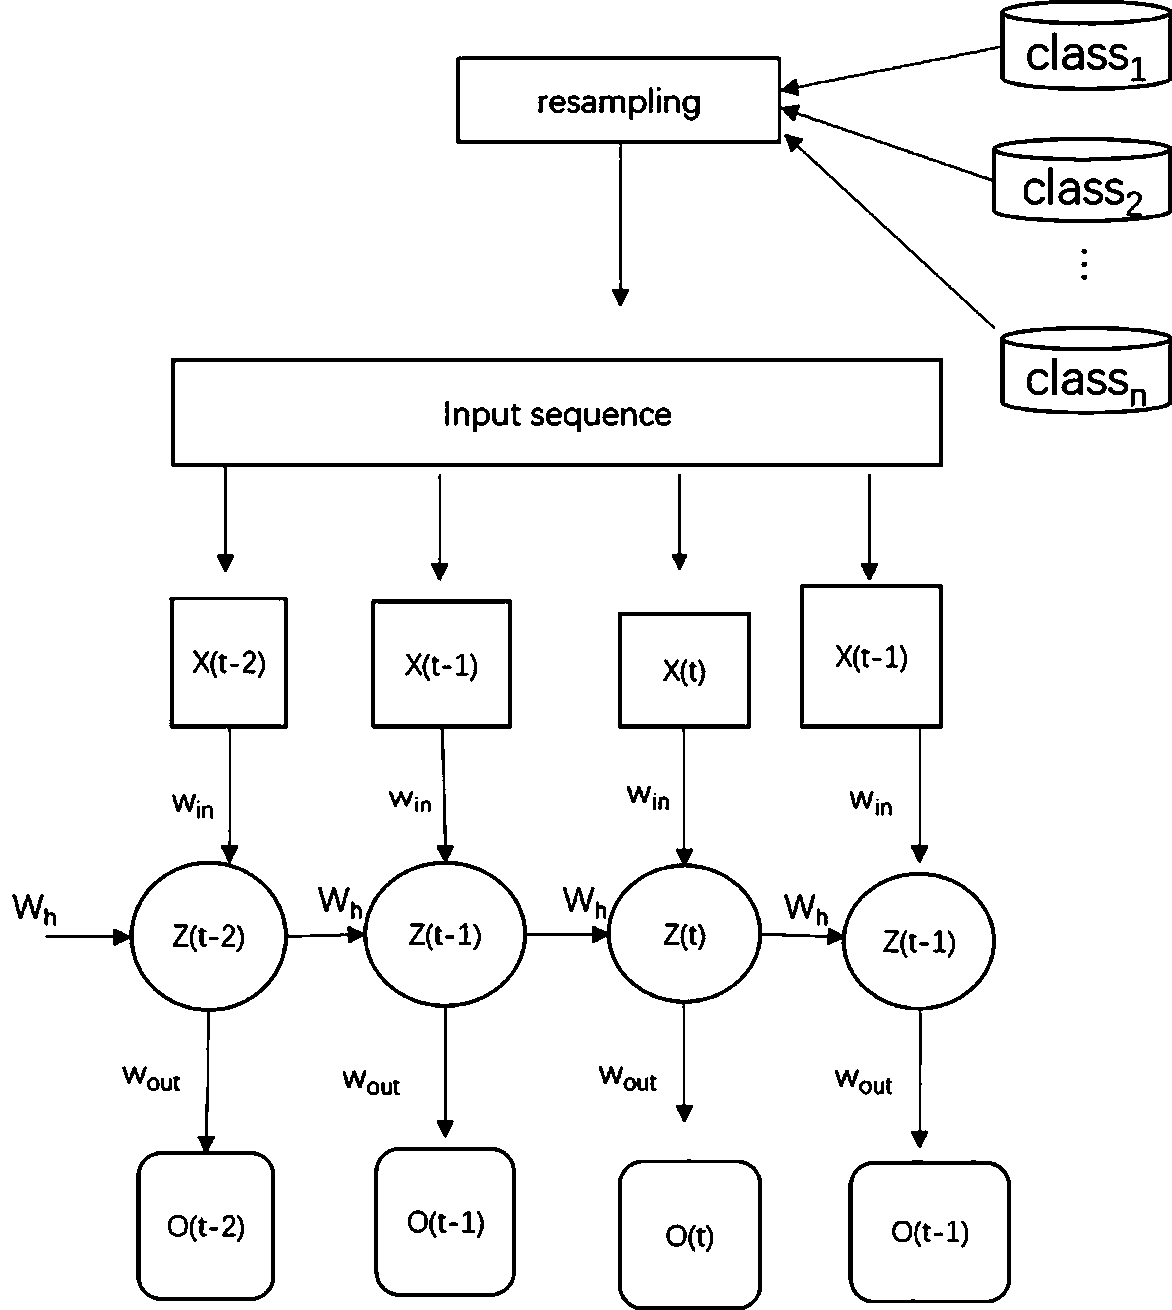 Subway passenger congestion degree prediction method adopting a resampling recurrent neural network